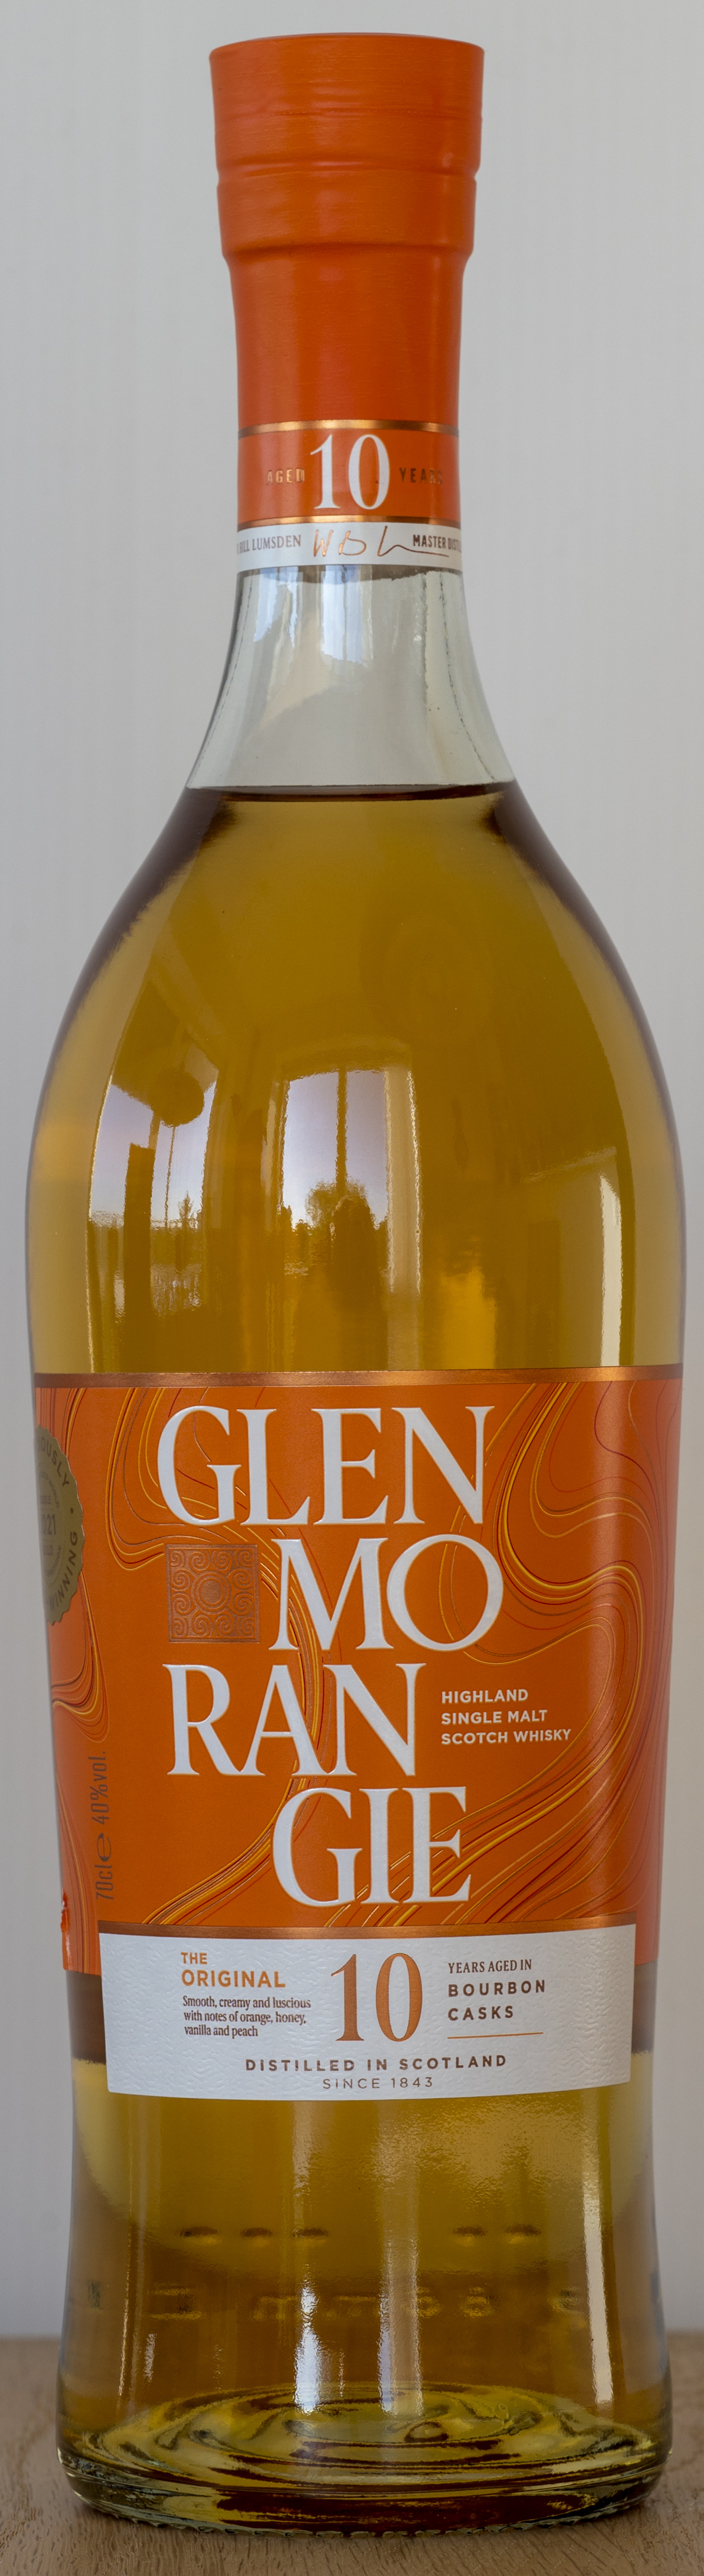 Billede: Z62_6451 - Glenmorangie 10 - bottle front.jpg